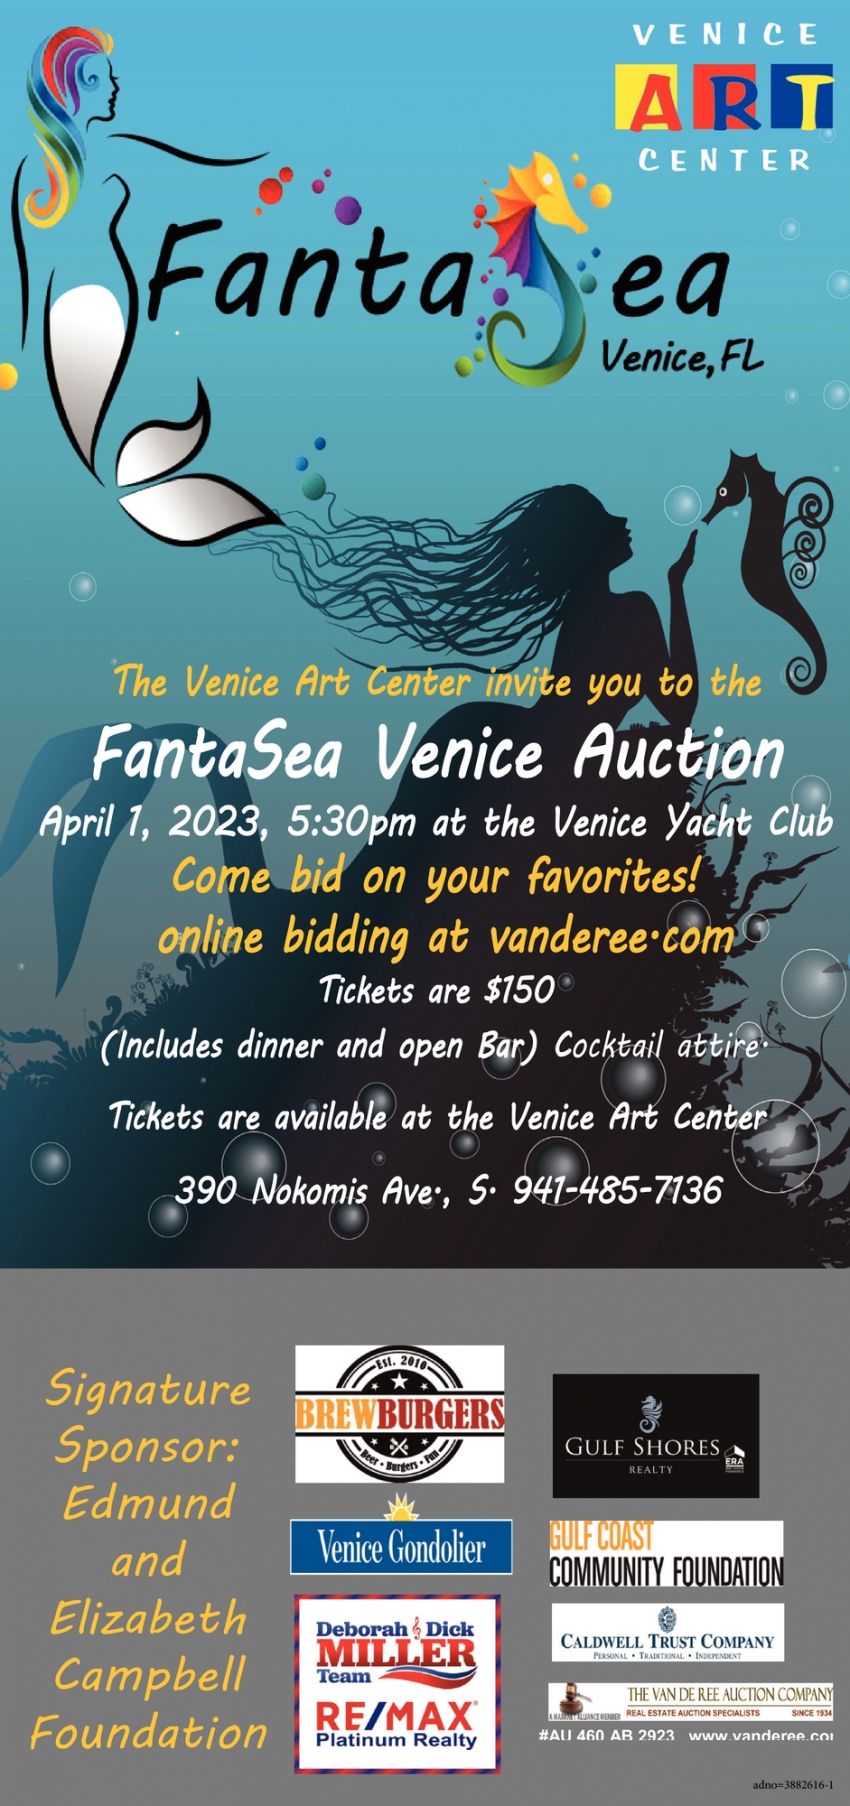 FantaSea Venice Auction